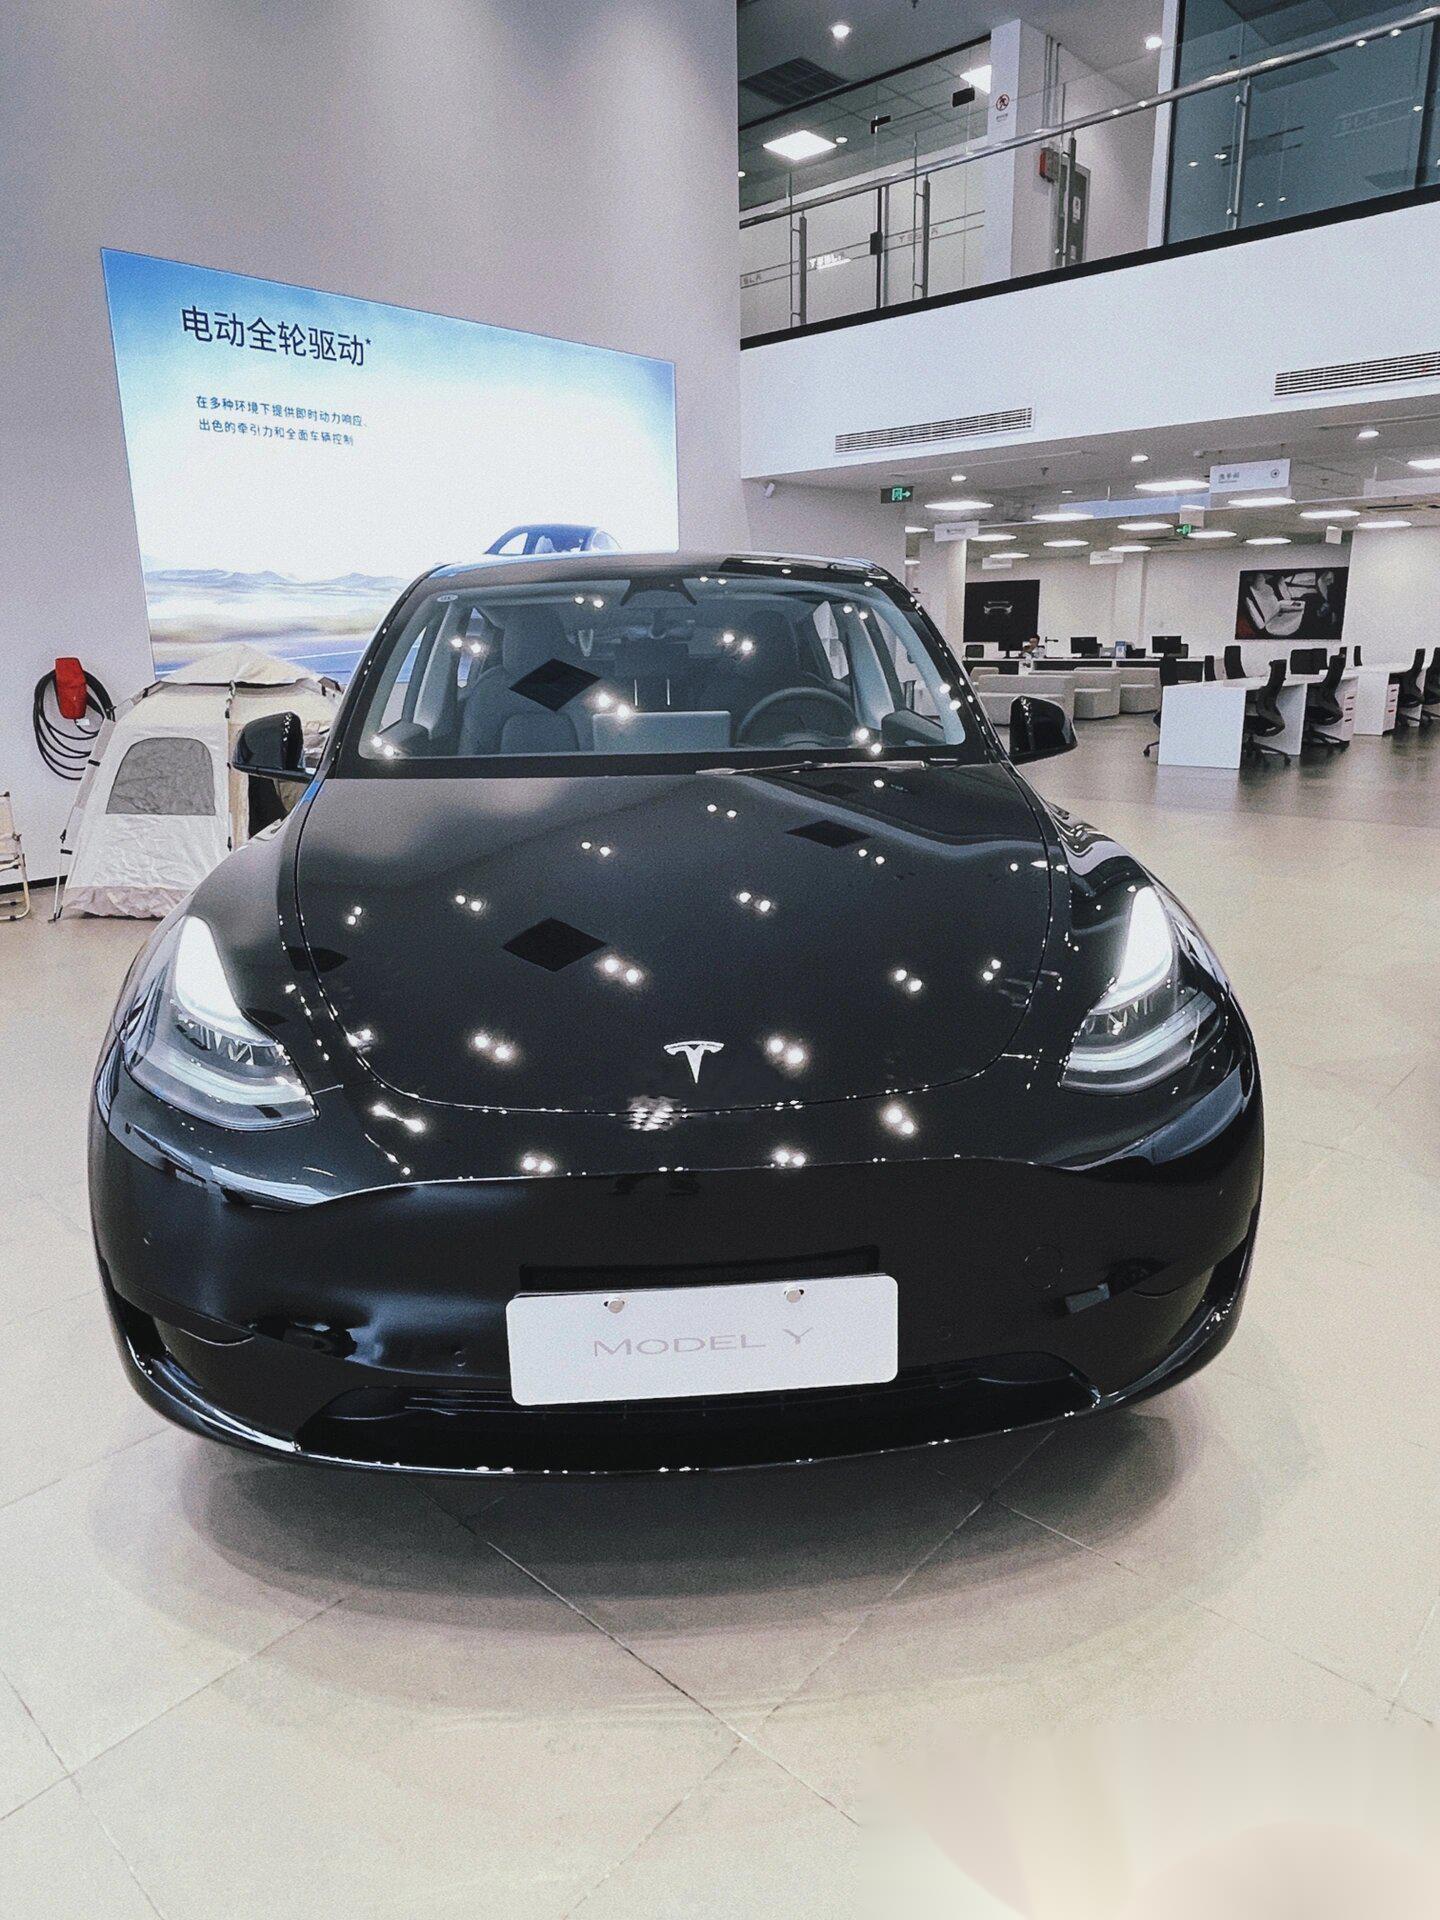 Tesla Model Y 上市日期確認 3 月 15 日美國開始交付 - 香港 unwire.hk